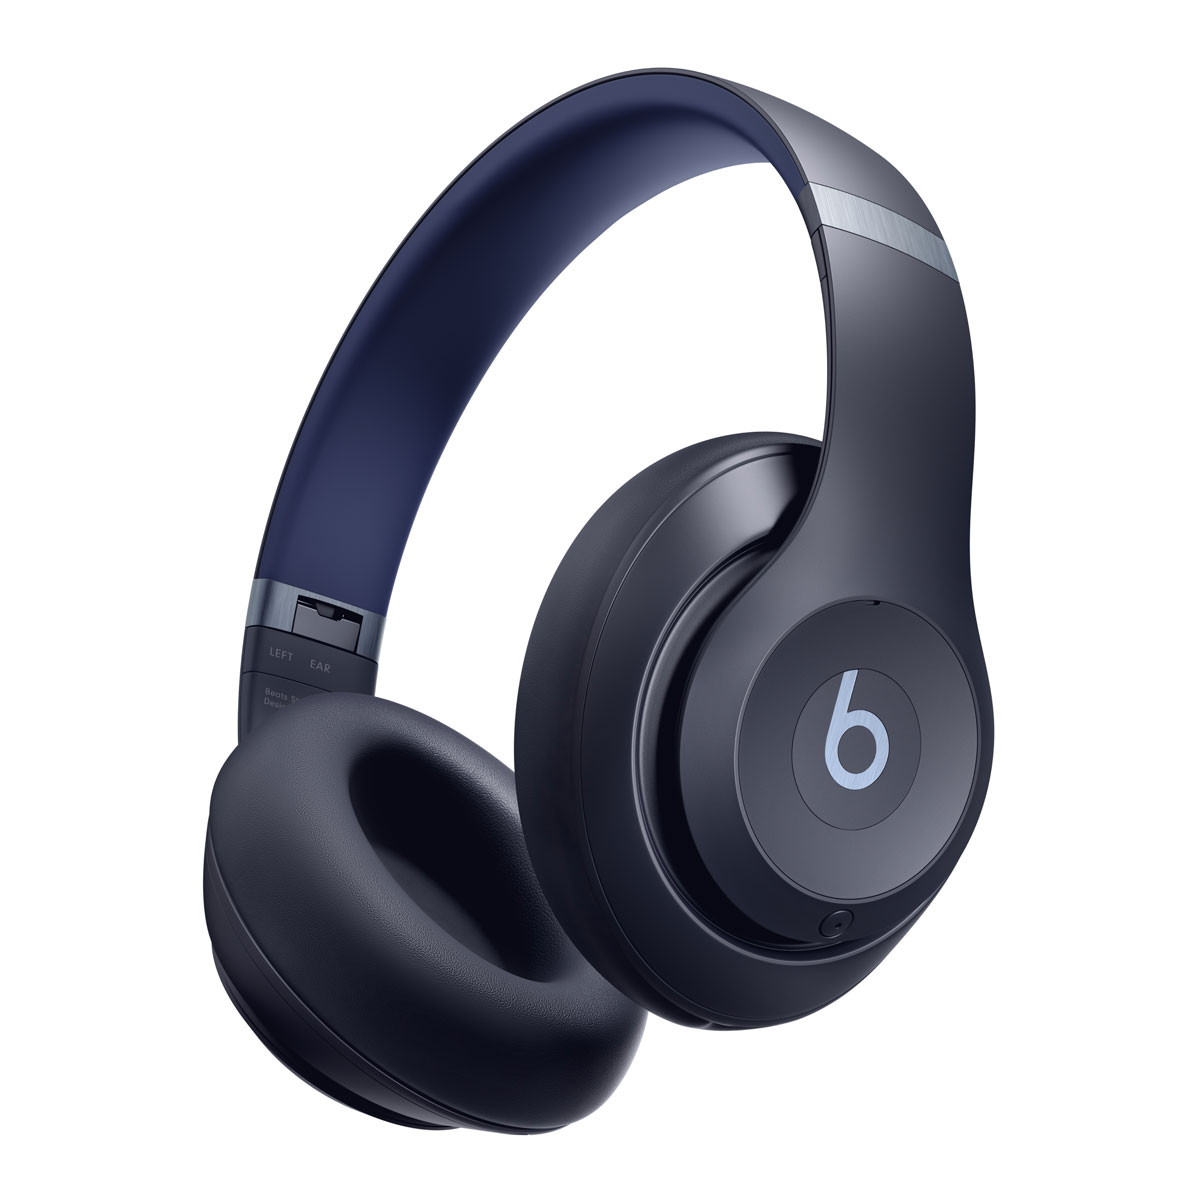 Beats Studio Pro ANC headphones fall back to a low of $250